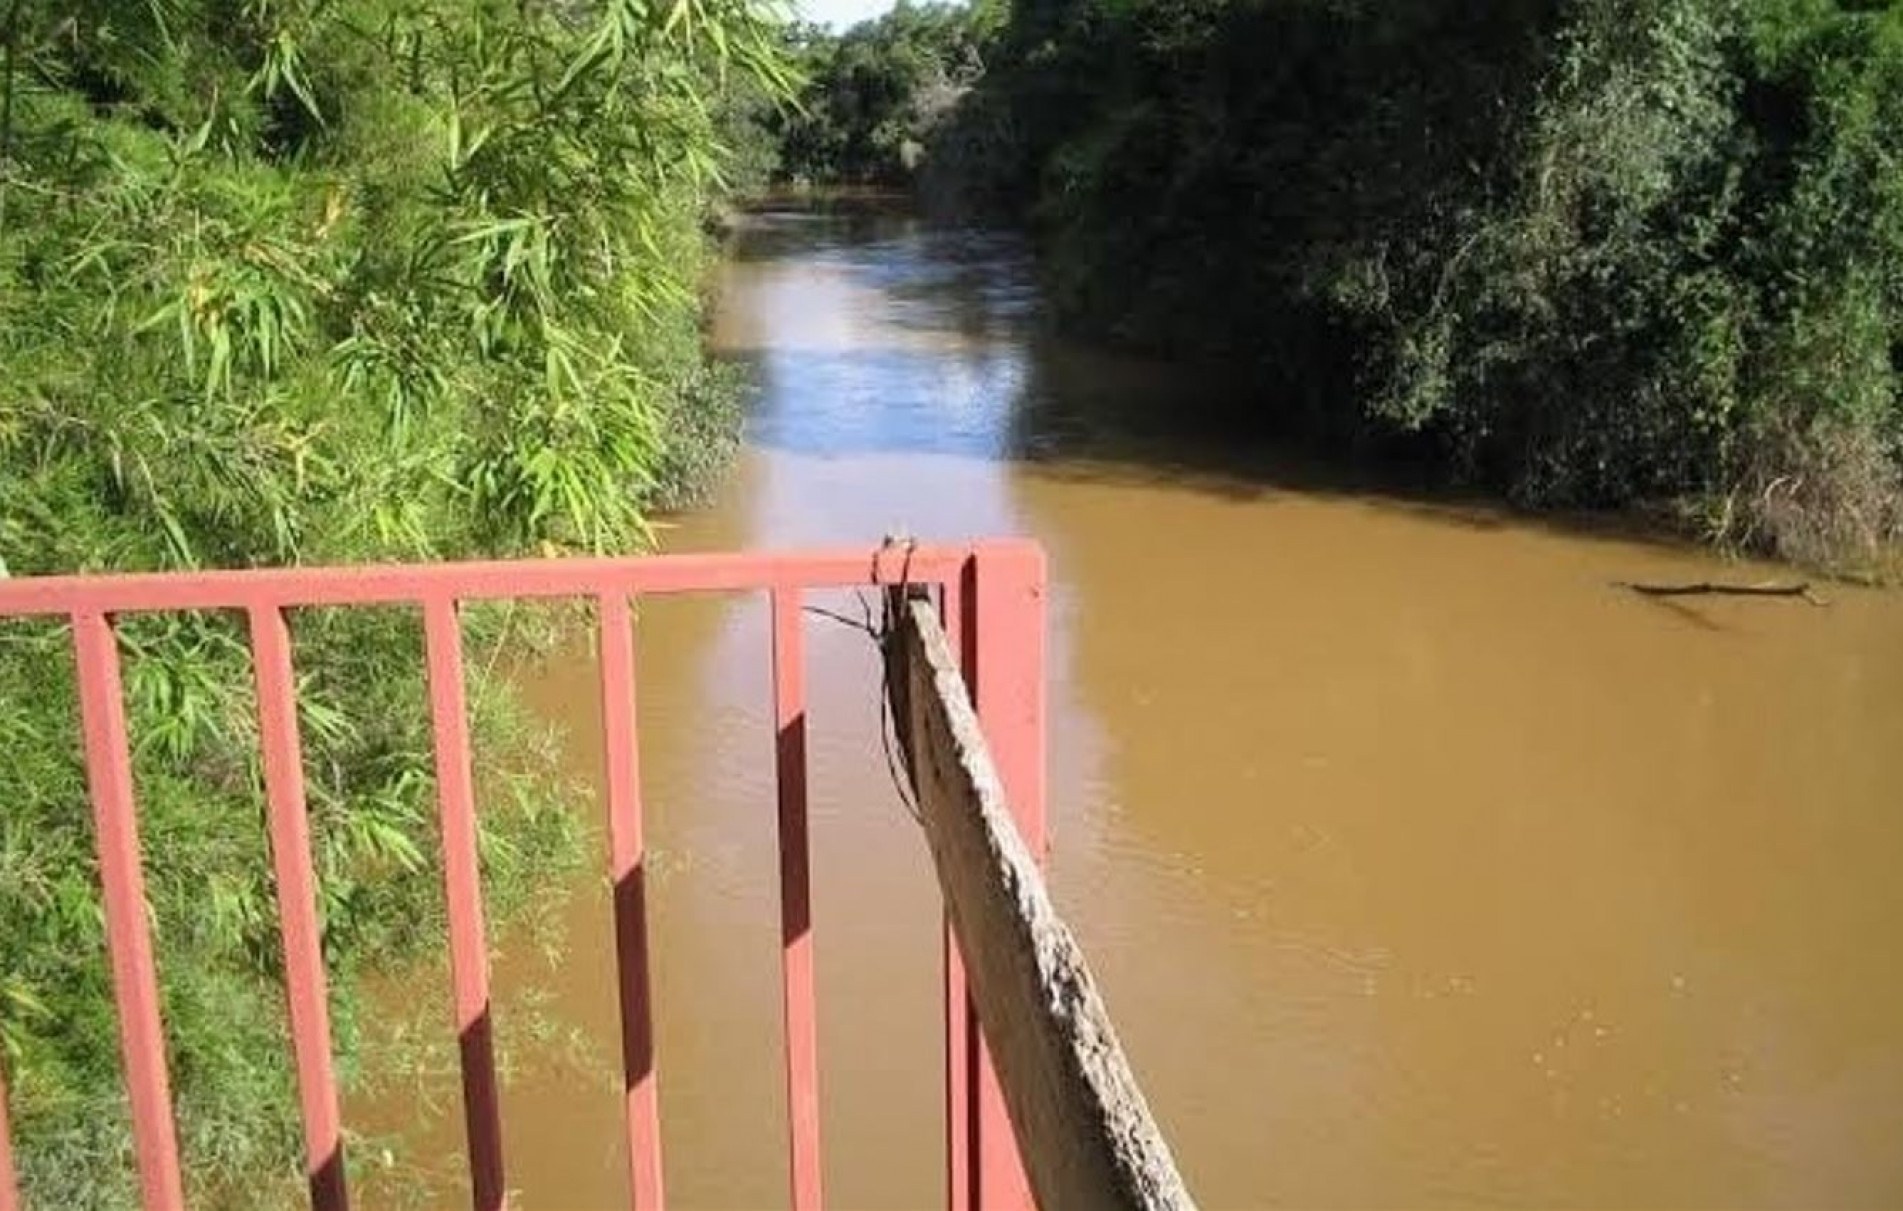 Prefeitura notificou MP sobre os serviços da Sabesp, que capta água do rio Sarapuí.